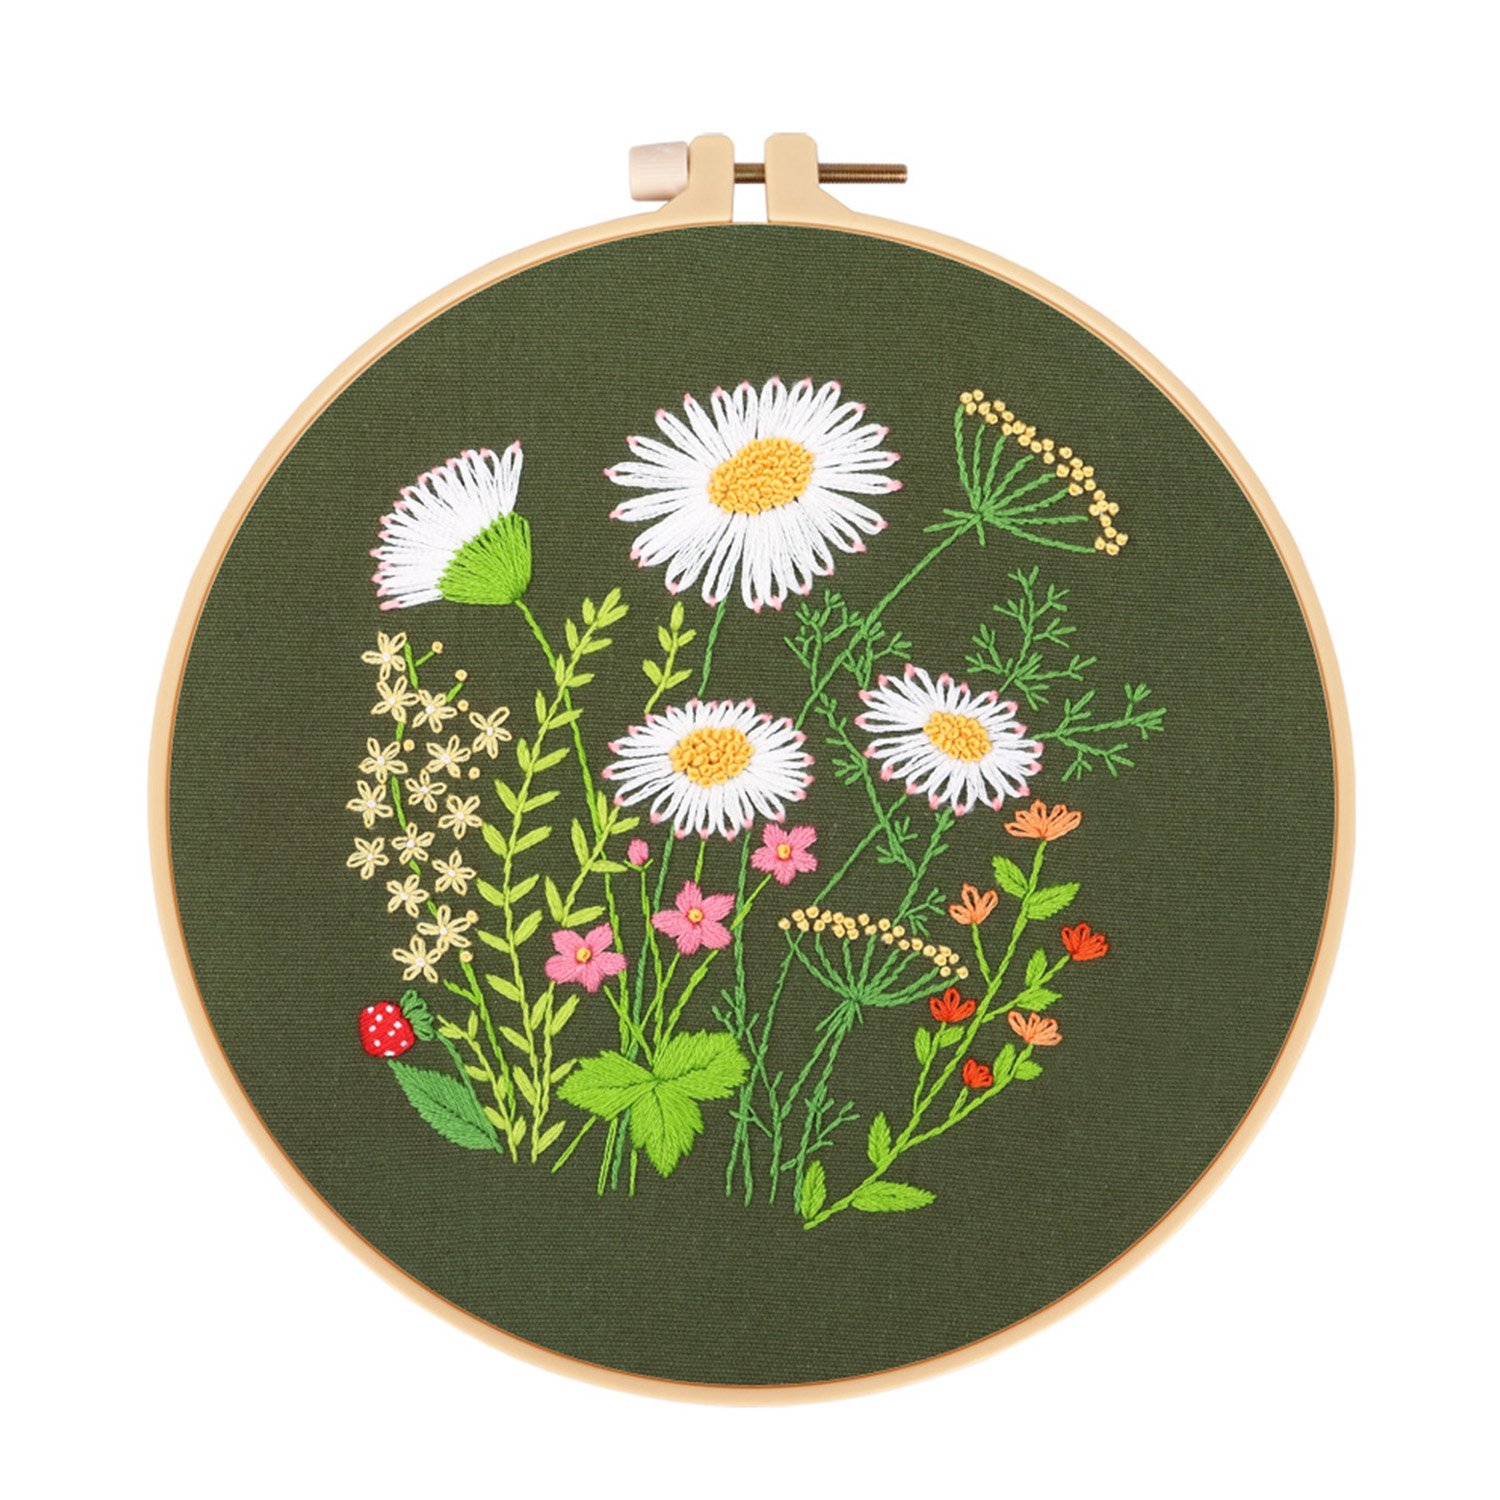 DIY Handmade Embroidery Cross stitch kit for Adult Beginner - Flower Bush Pattern